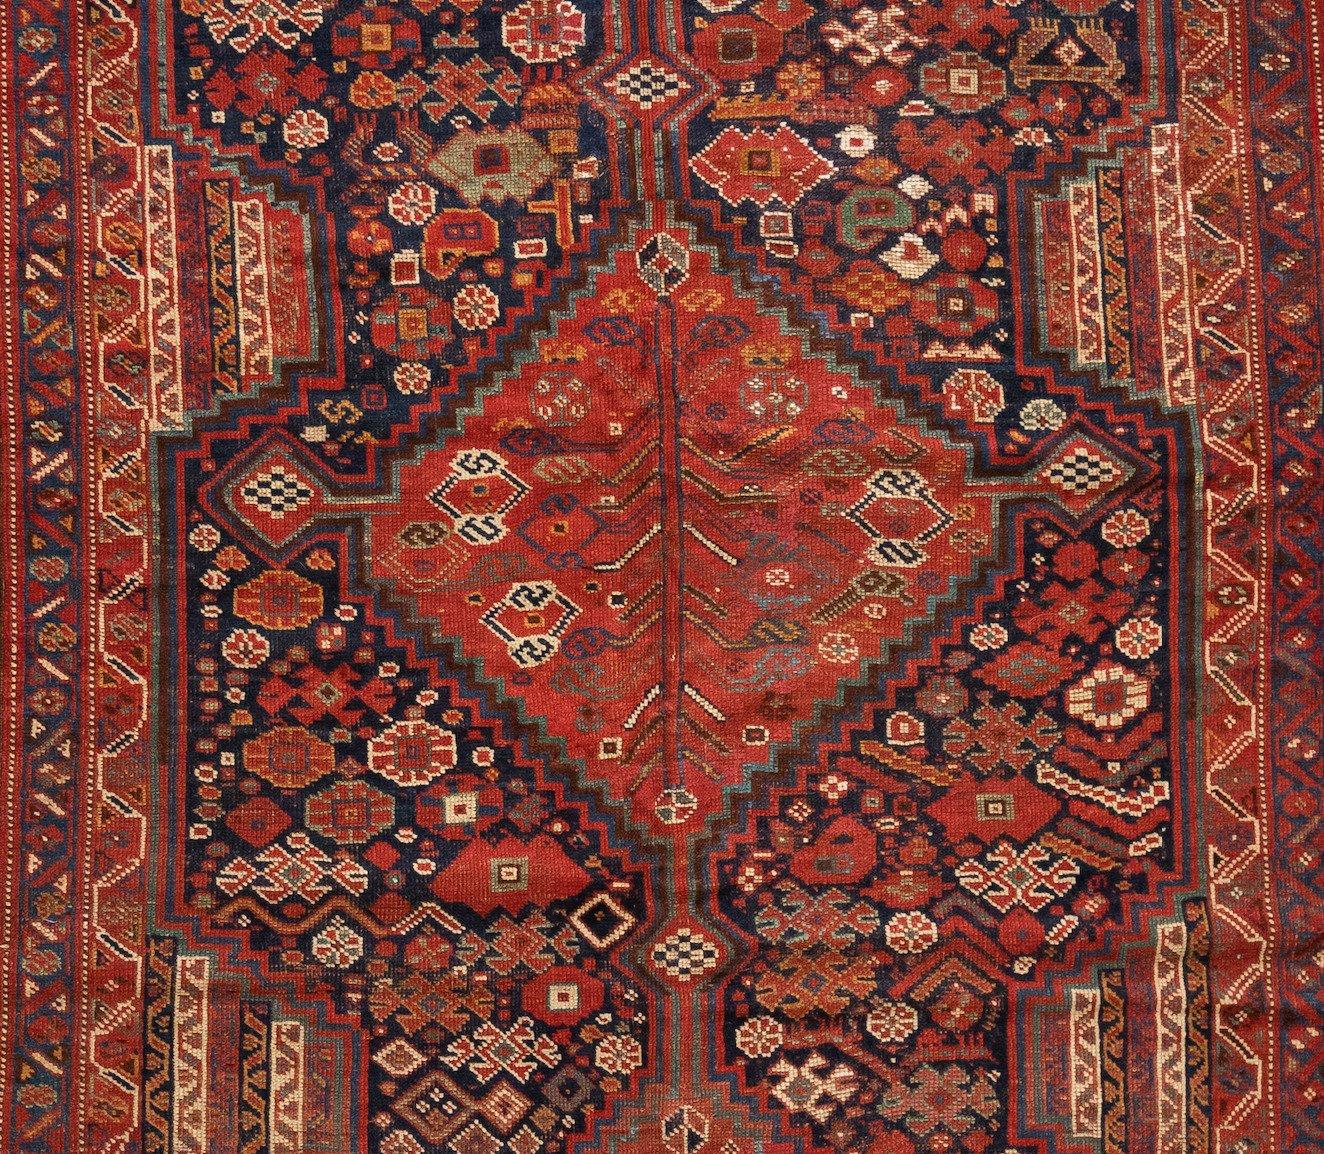 Tribal Antique Red Persian Khamseh Geometric Rug, circa 1920s-1930s For Sale